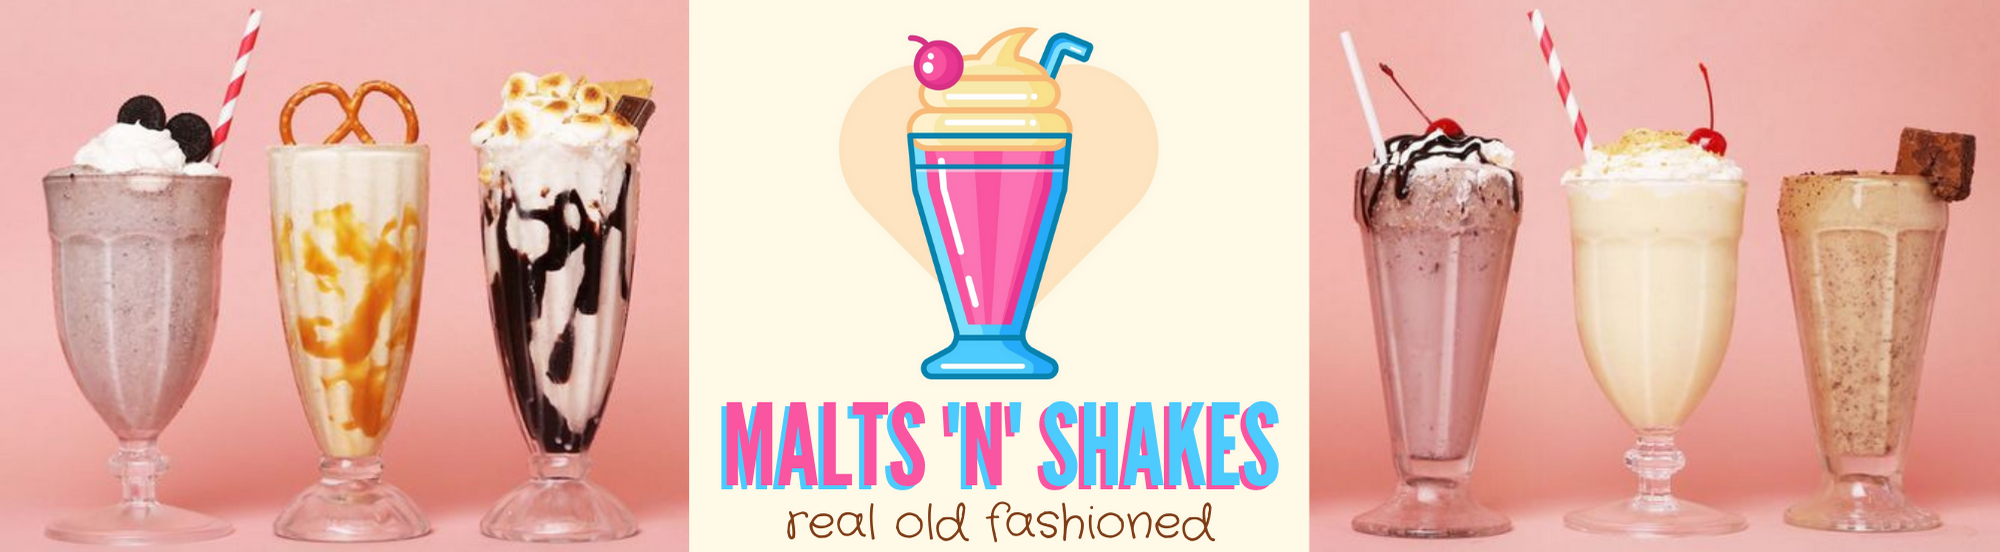 Malts 'n' Shakes